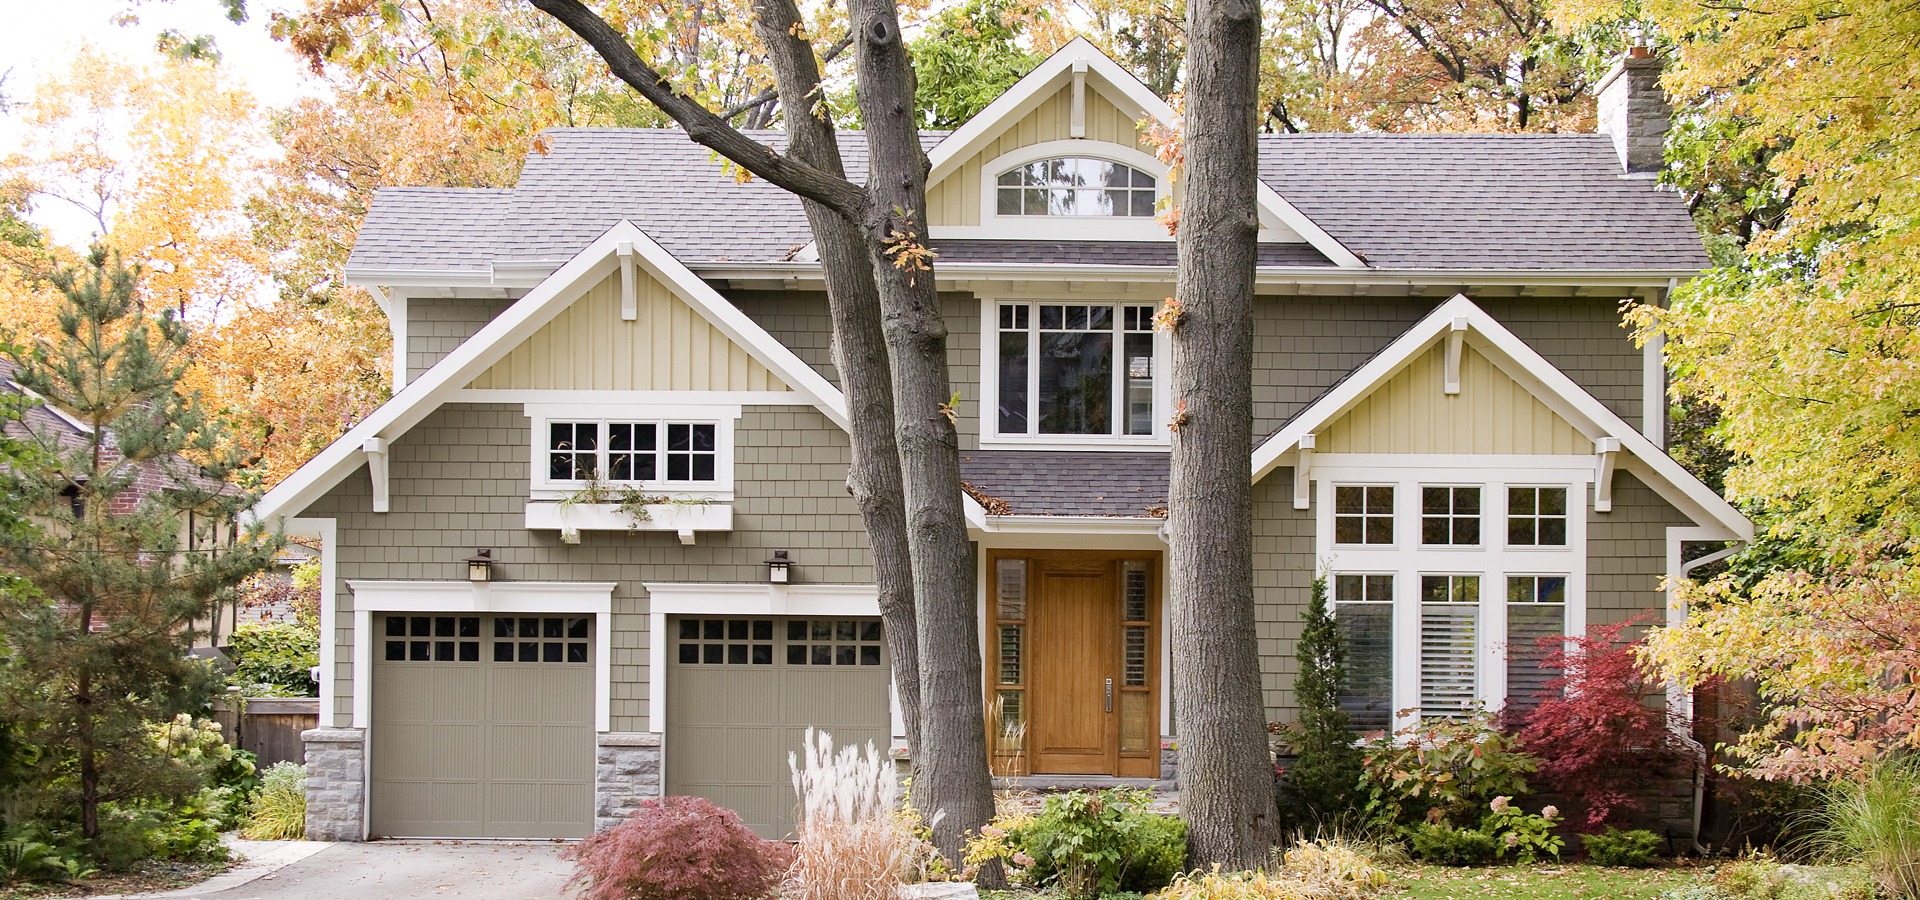 Custom home with white brackets, green garage door and grid windows.